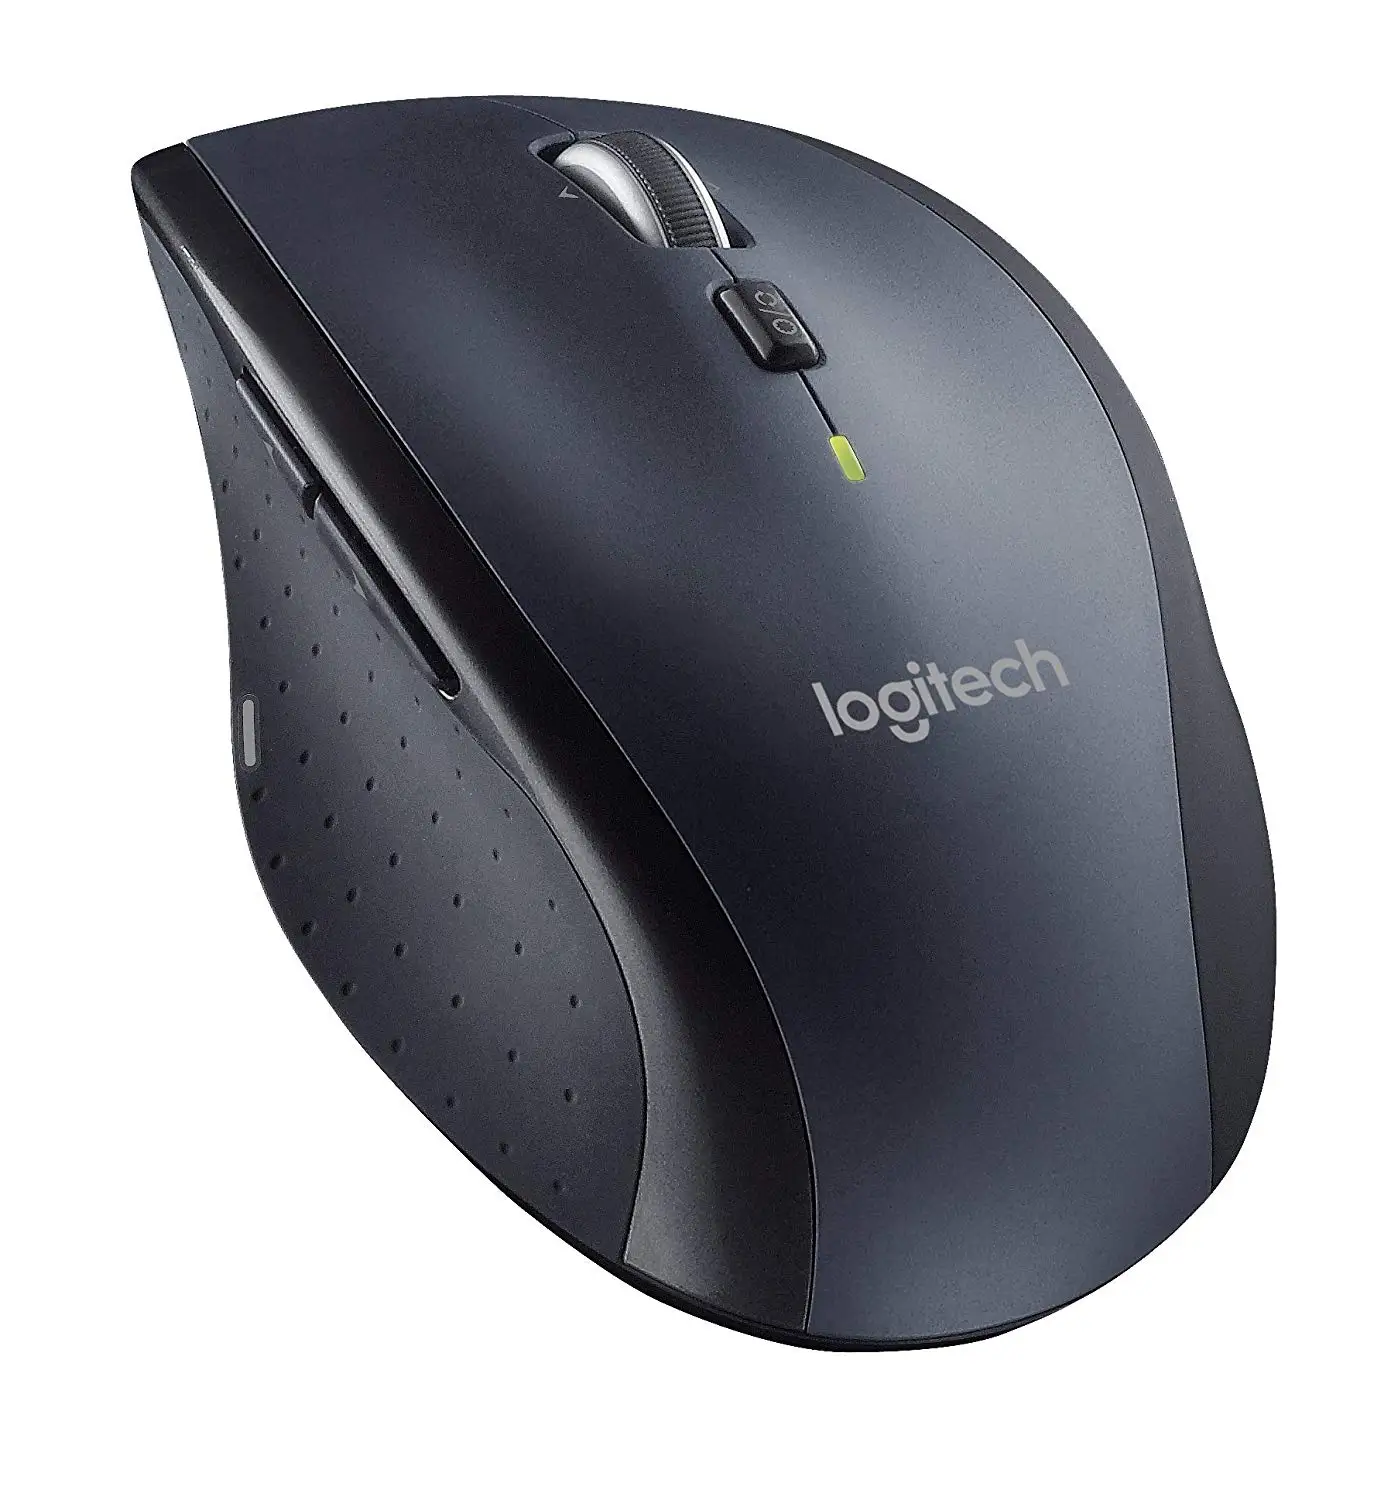 Lighed bid Øjeblik Logitech M705 Laser Wireless Mouse Support Official Verification With  2.4ghz Wireless 1000dpi For Windows 10/8/7 - Mouse - AliExpress